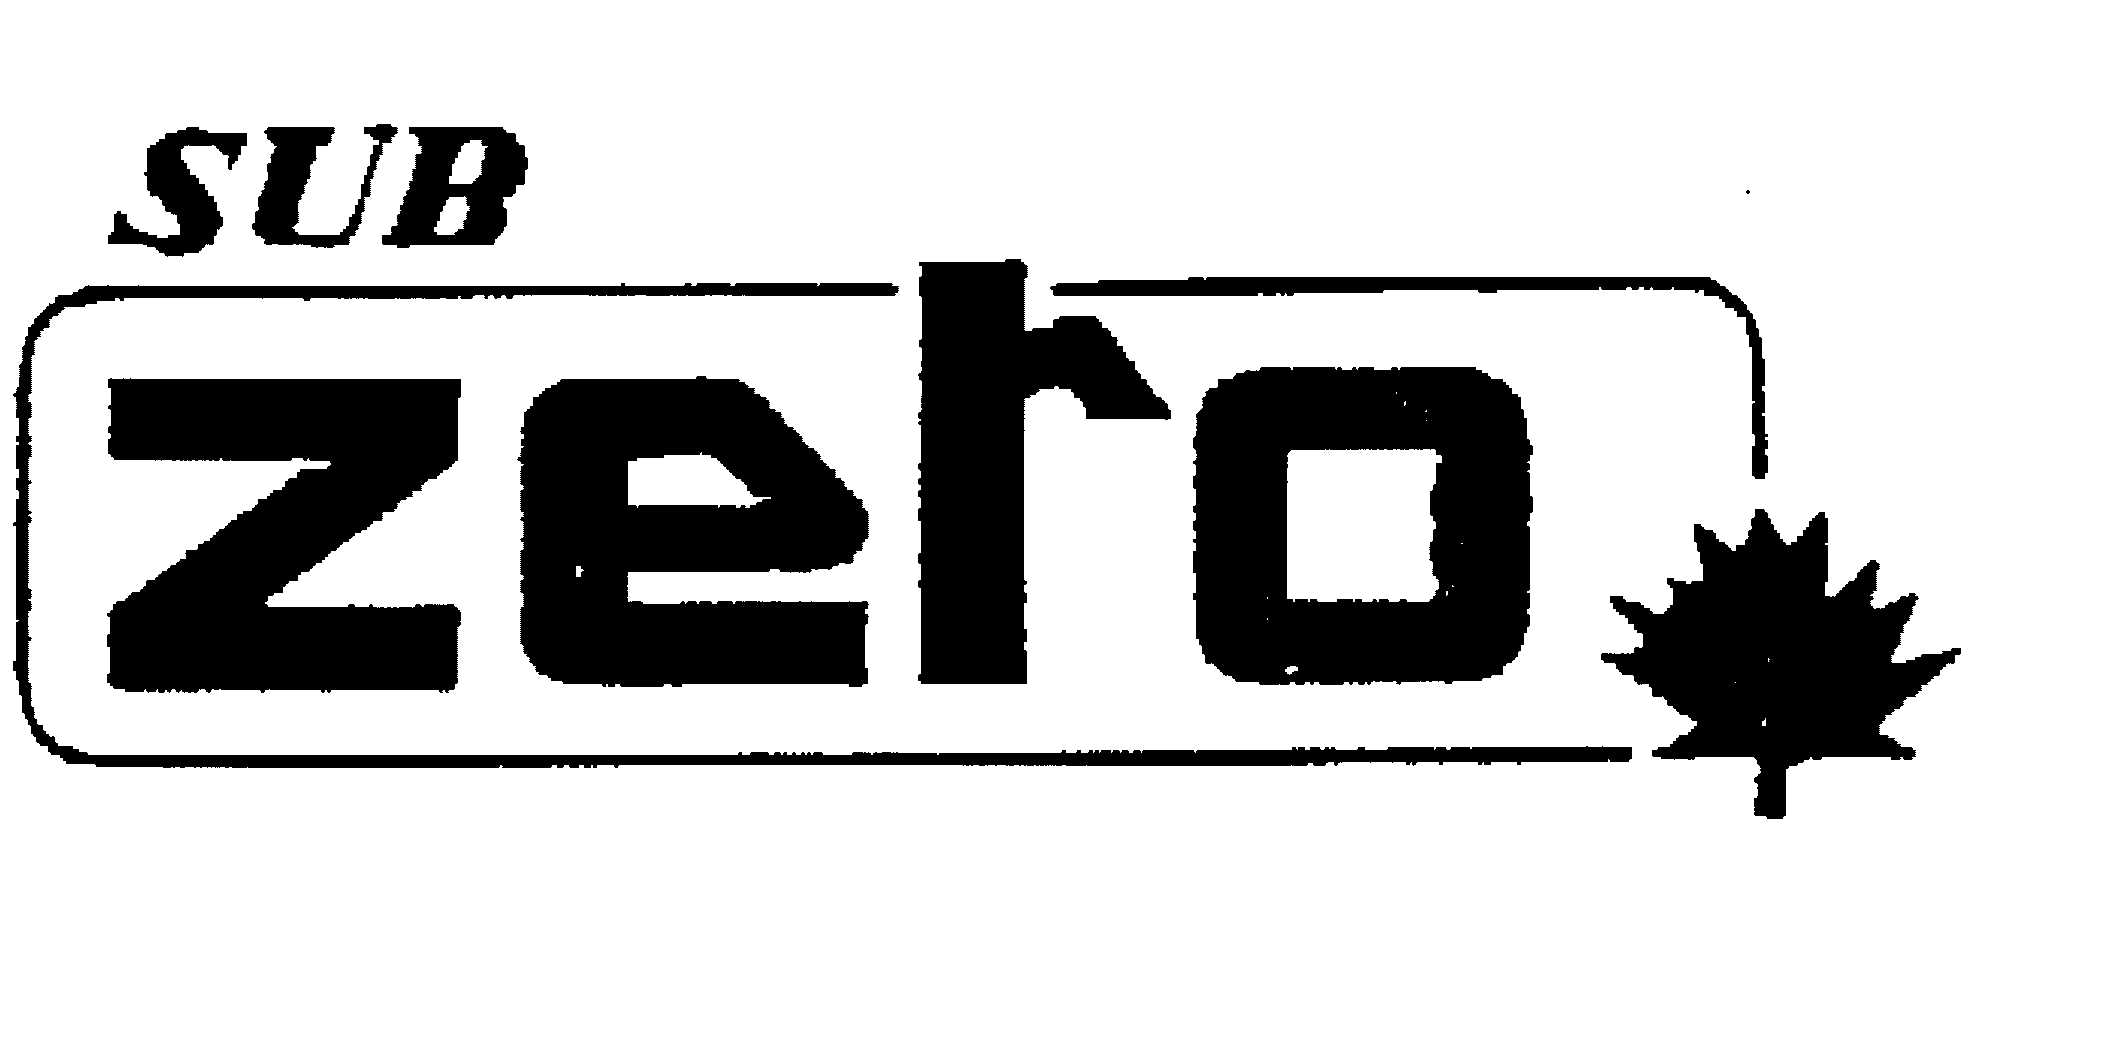 Trademark Logo SUB ZERO